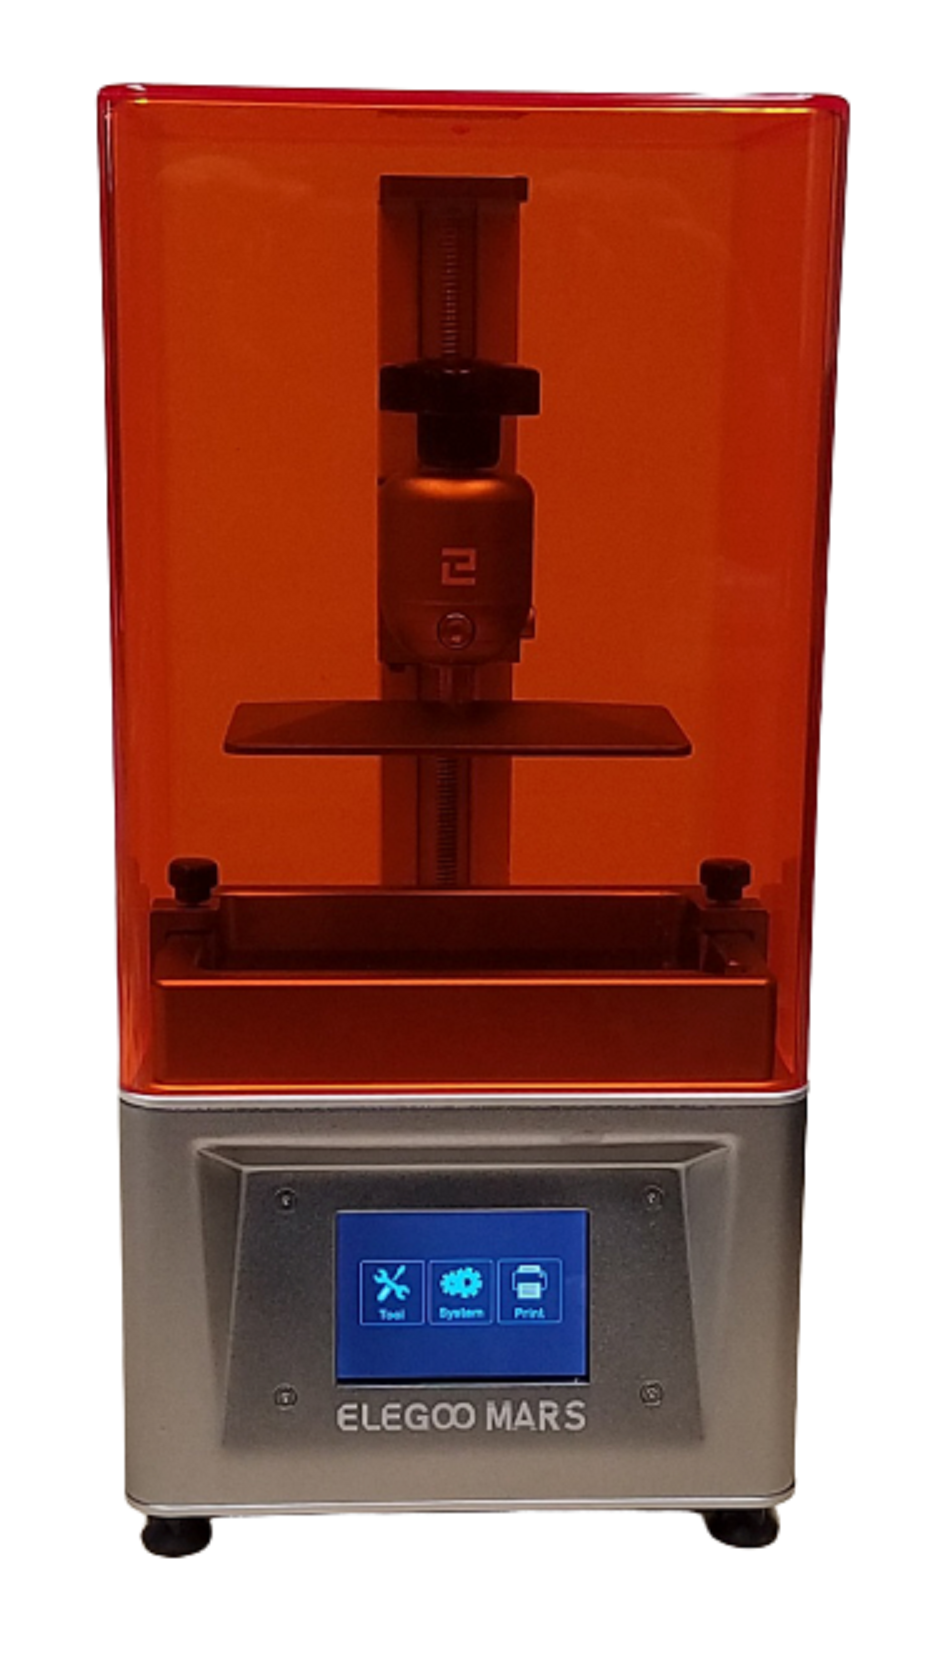 ELEGOO Mars UV Photocuring LCD 3D Printer Silver w/ 100 Gram Water Washable Resin